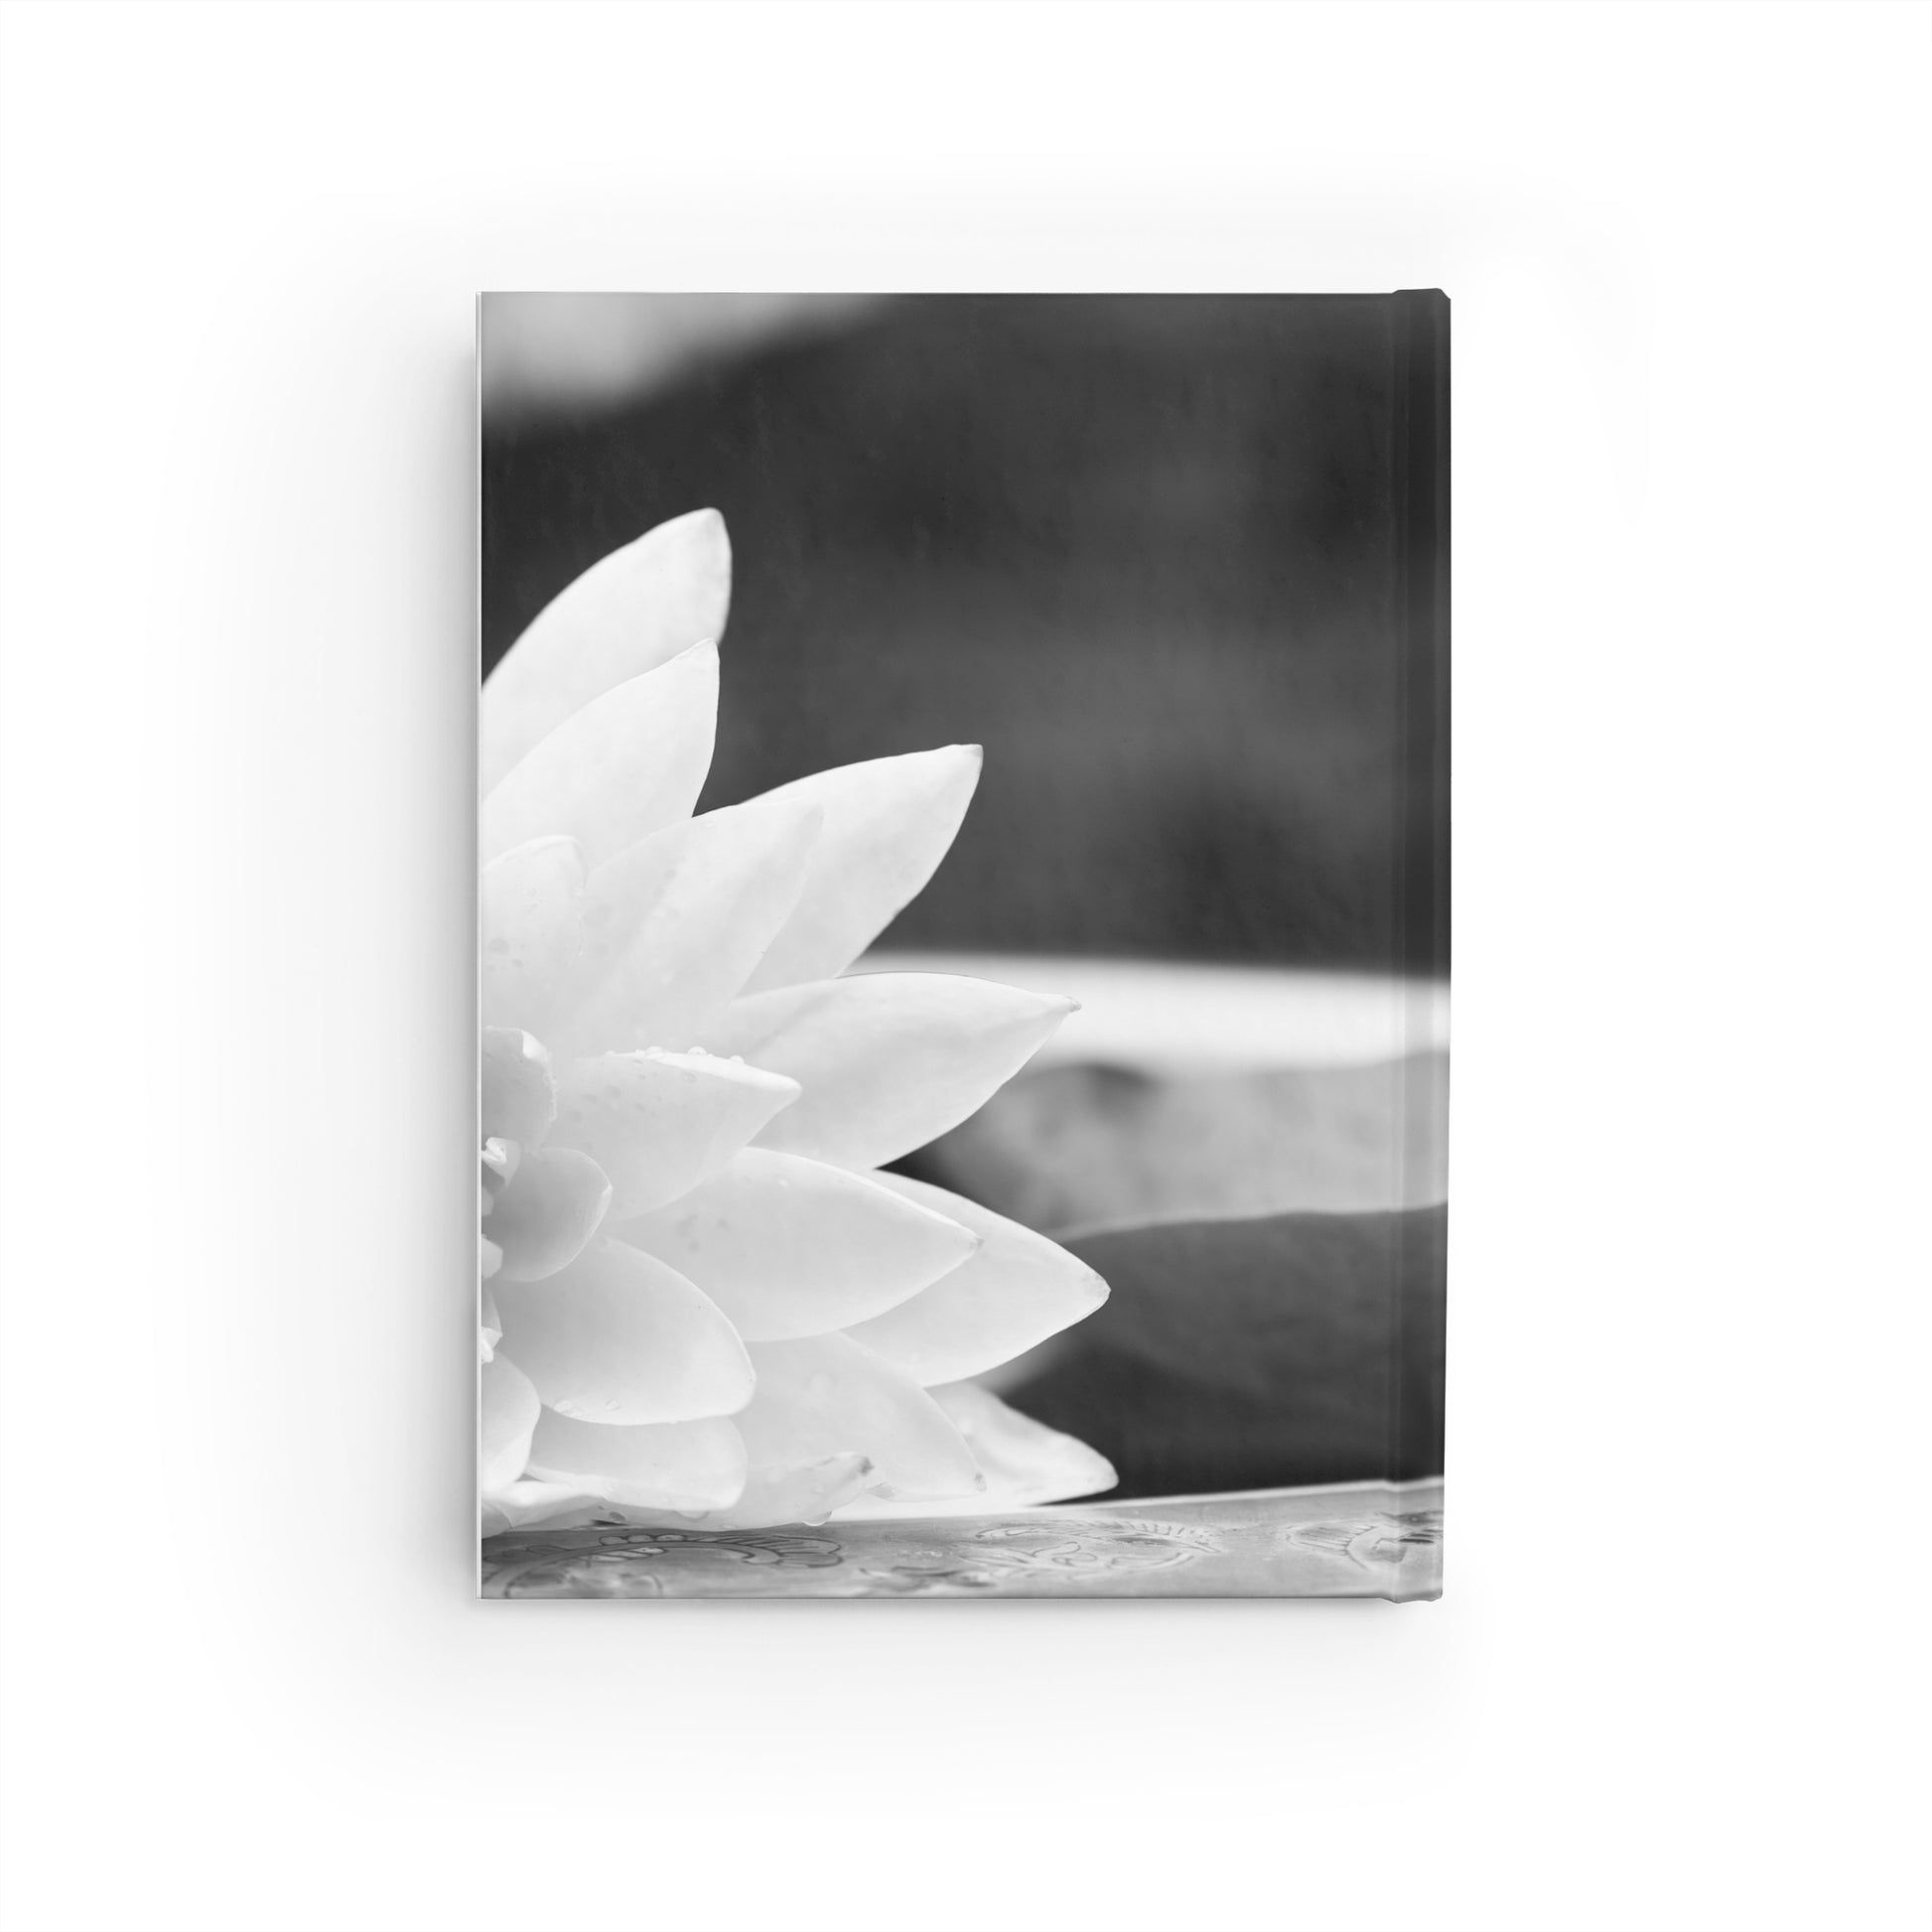 "You Are Loved" Sketchbook with Elegant Lotus Flower - 689 Designs